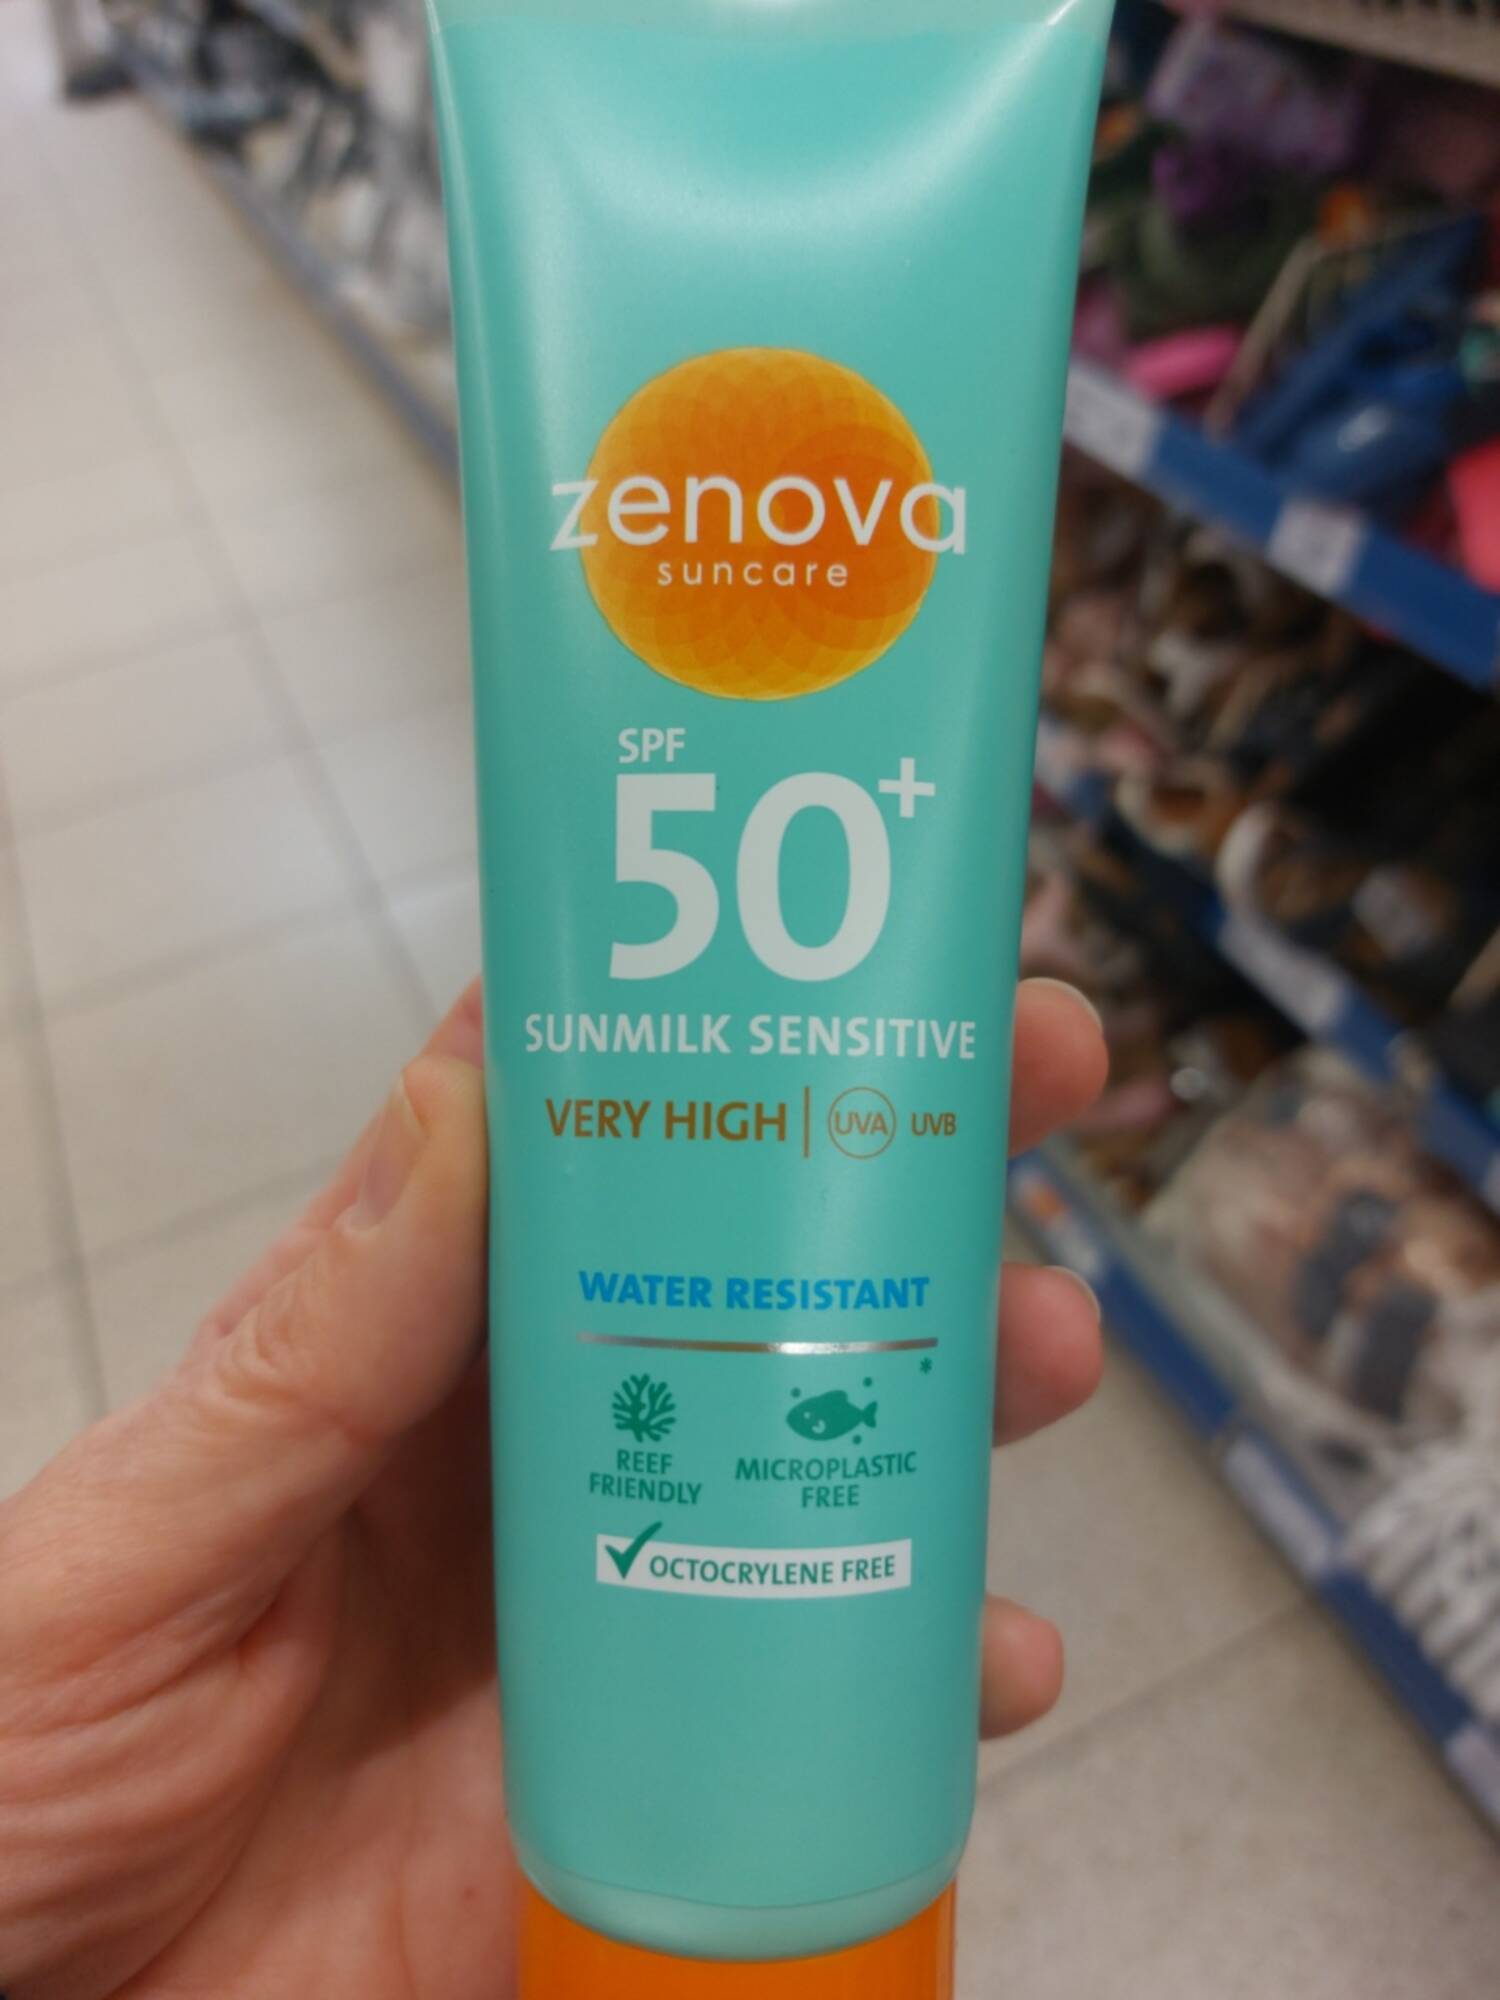 ZENOVA - Sunmilk sensitive SPF 50+